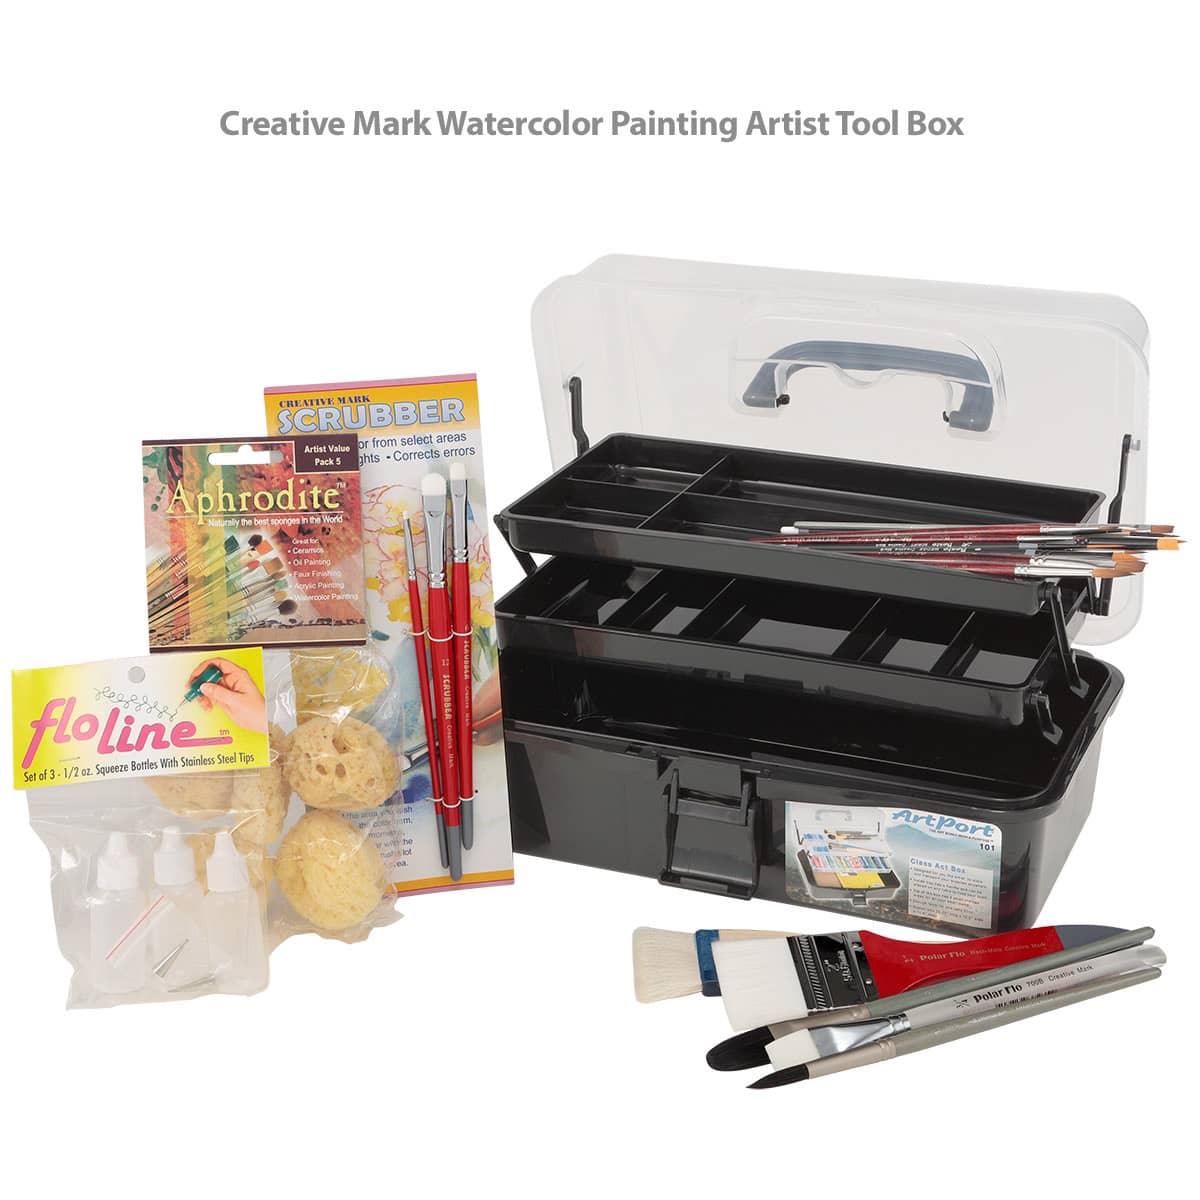 Creative Mark Watercolor Painting Artist Tool Box - 30pc